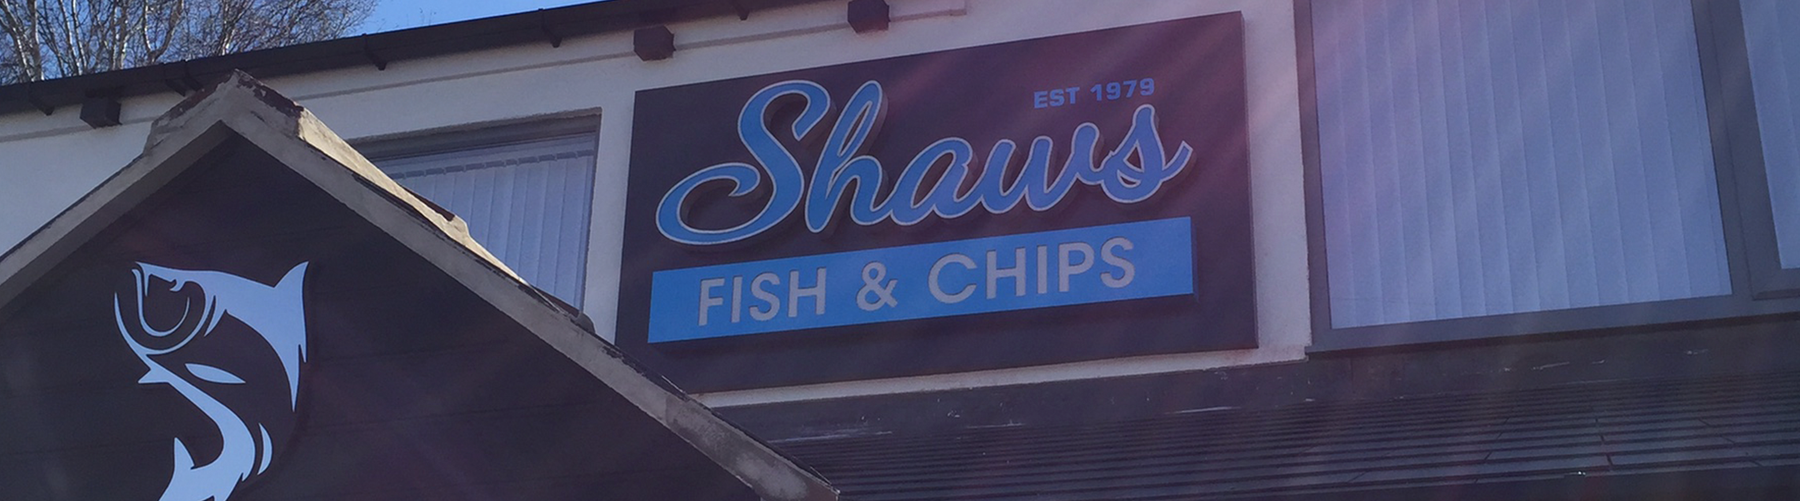 VoCoVo Go Case Study Shaw's Fish & Chips